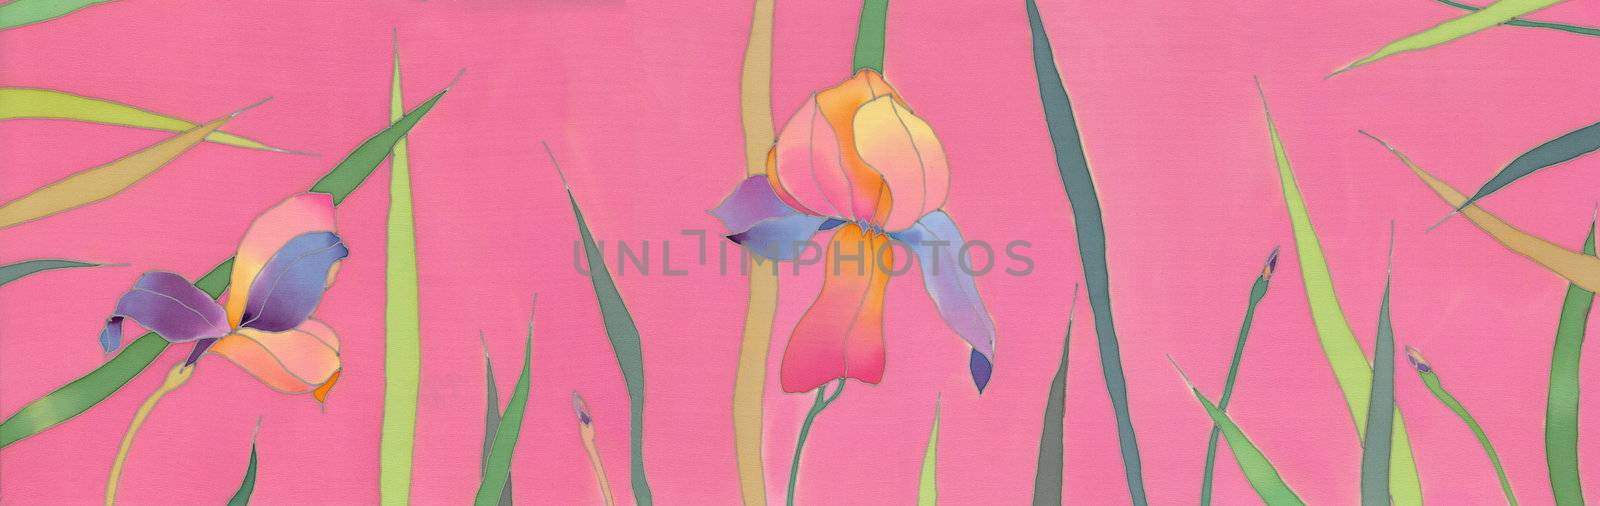 irises background by vergasova